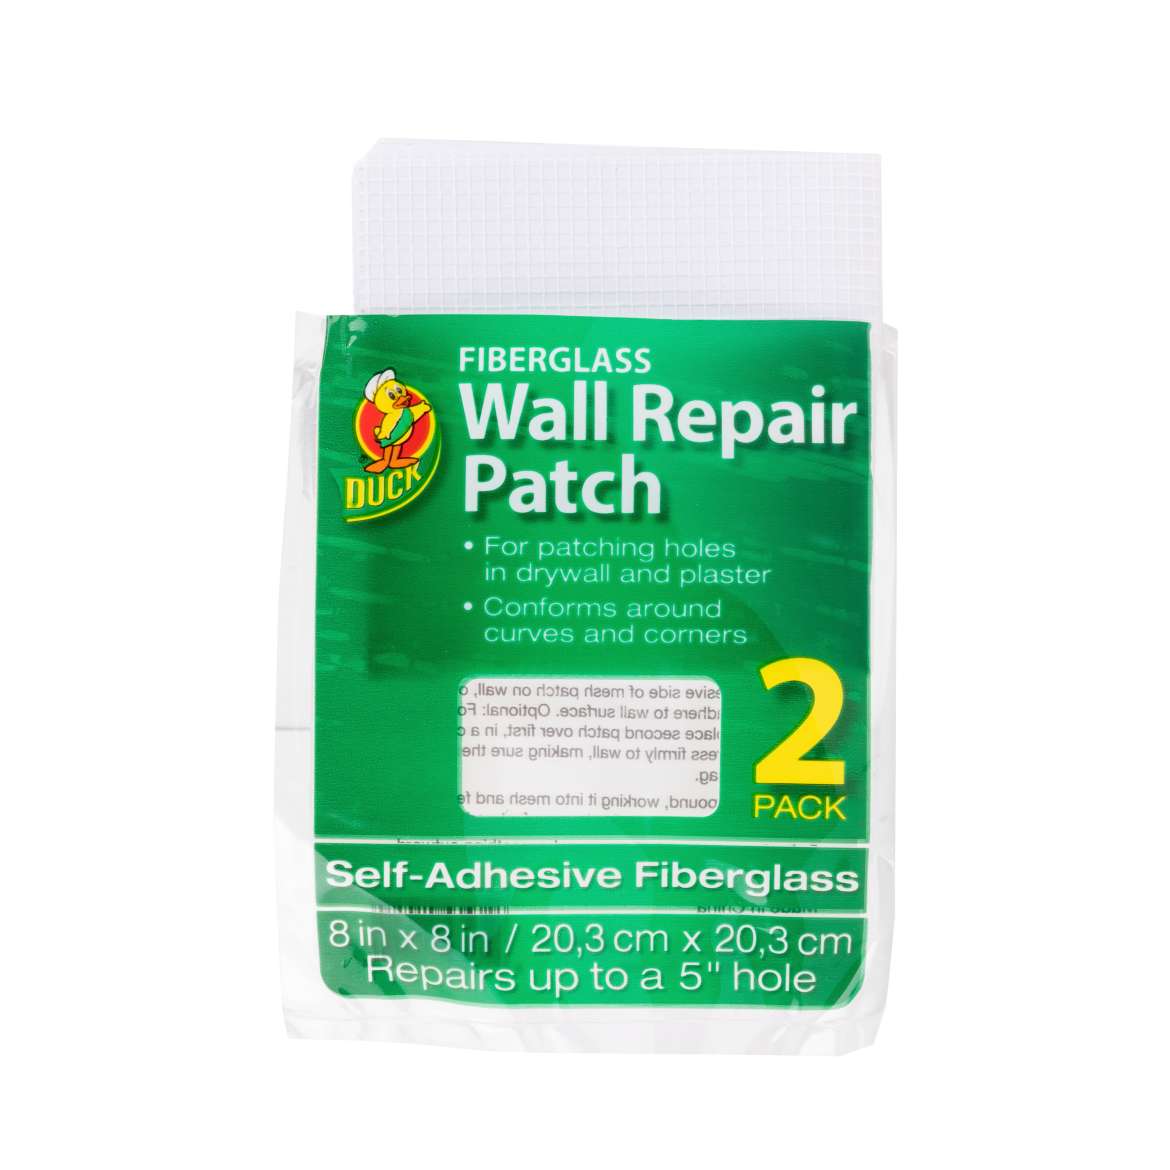 Fiberglass Wall Repair Patch